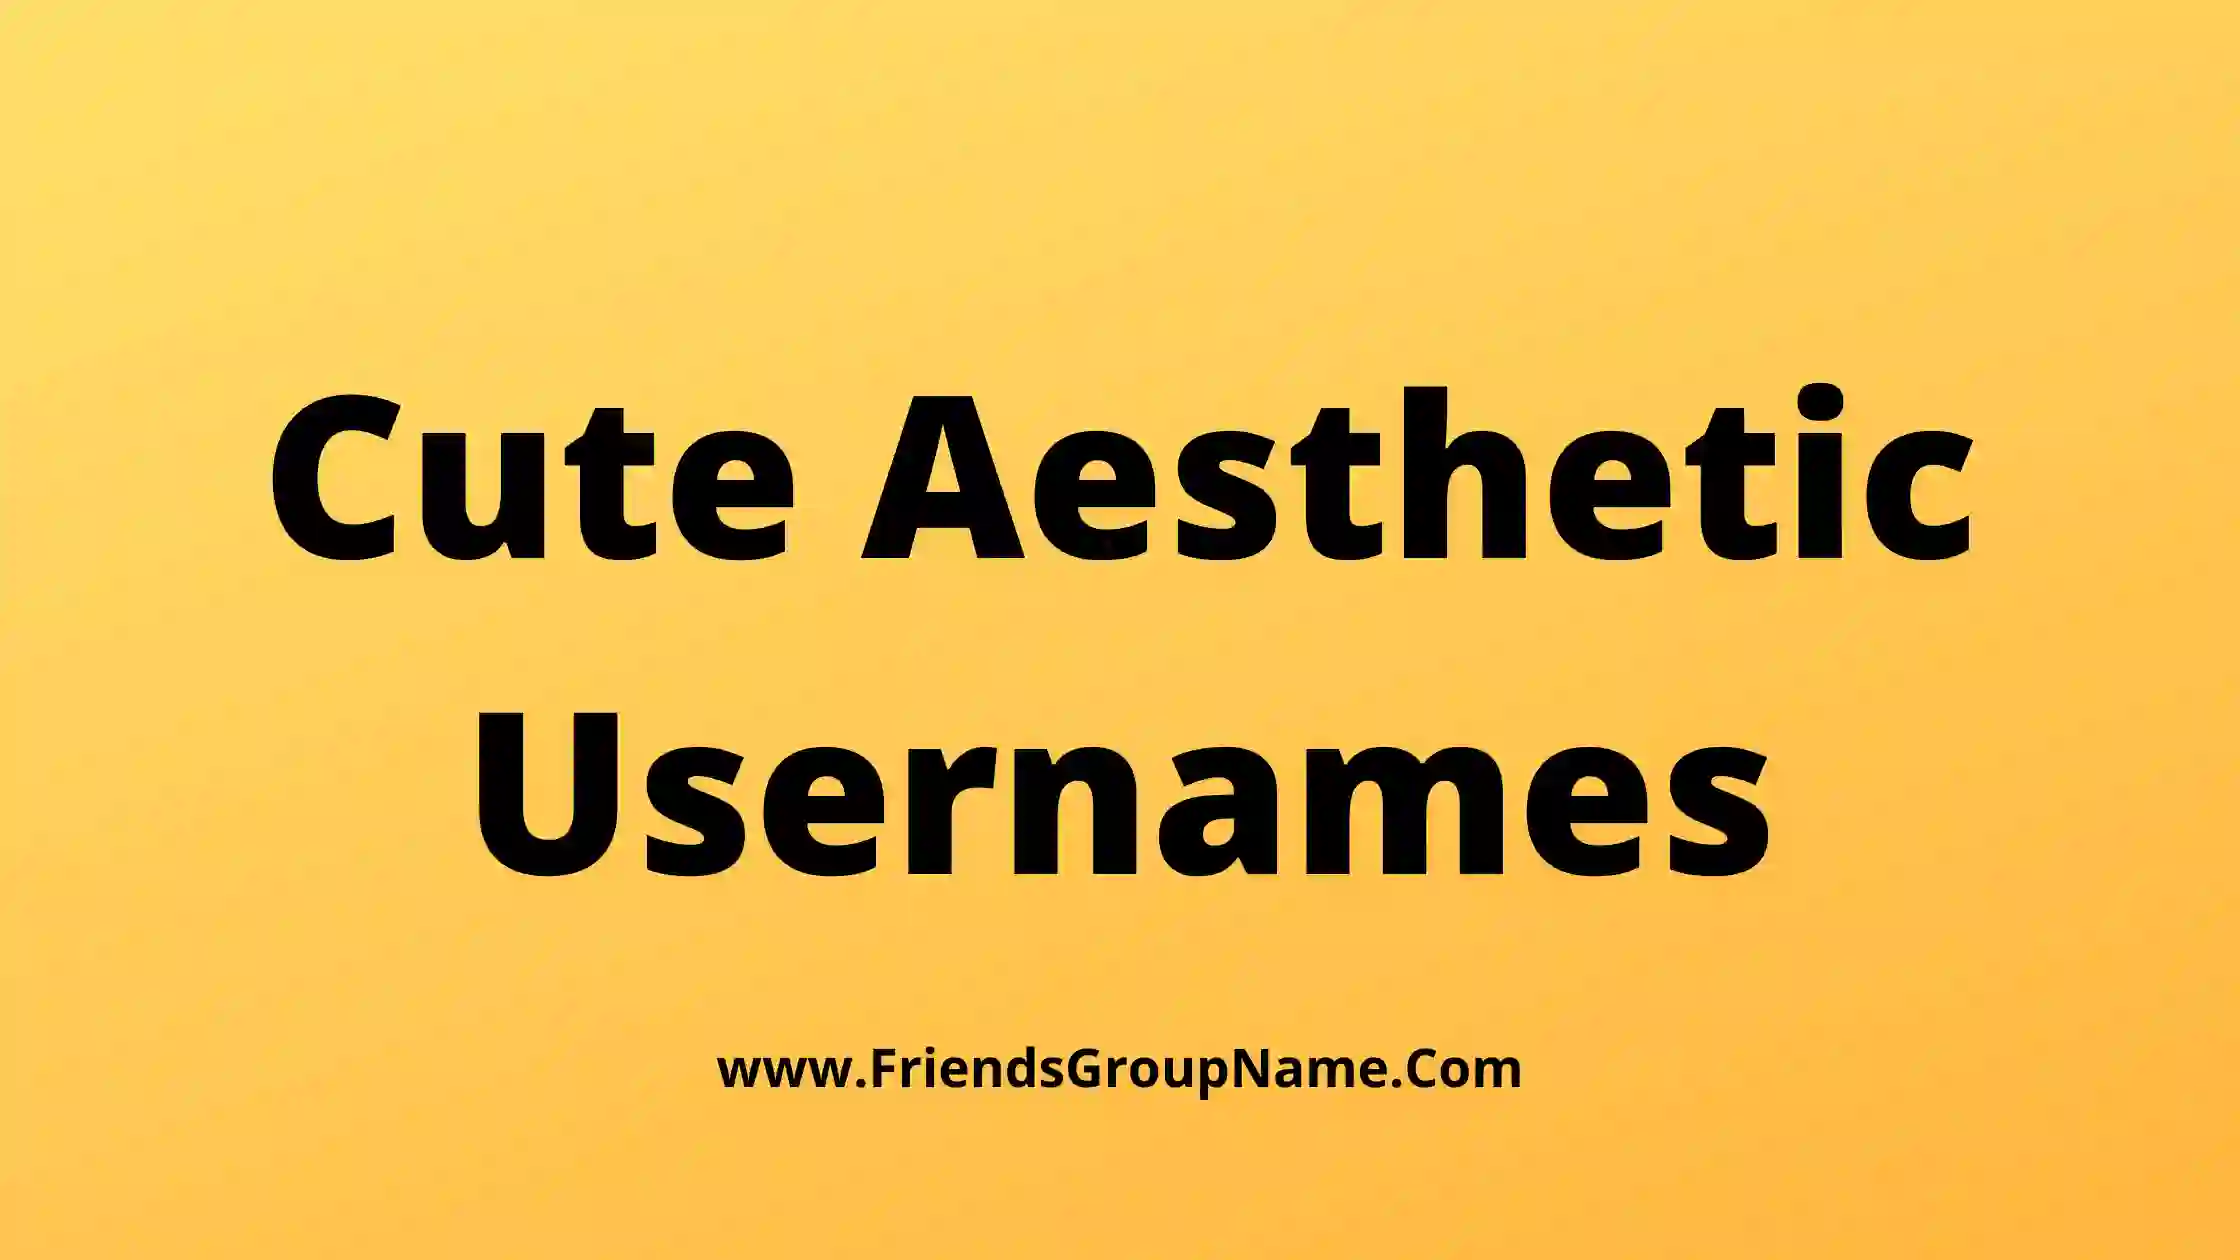 Cute Aesthetic Usernames